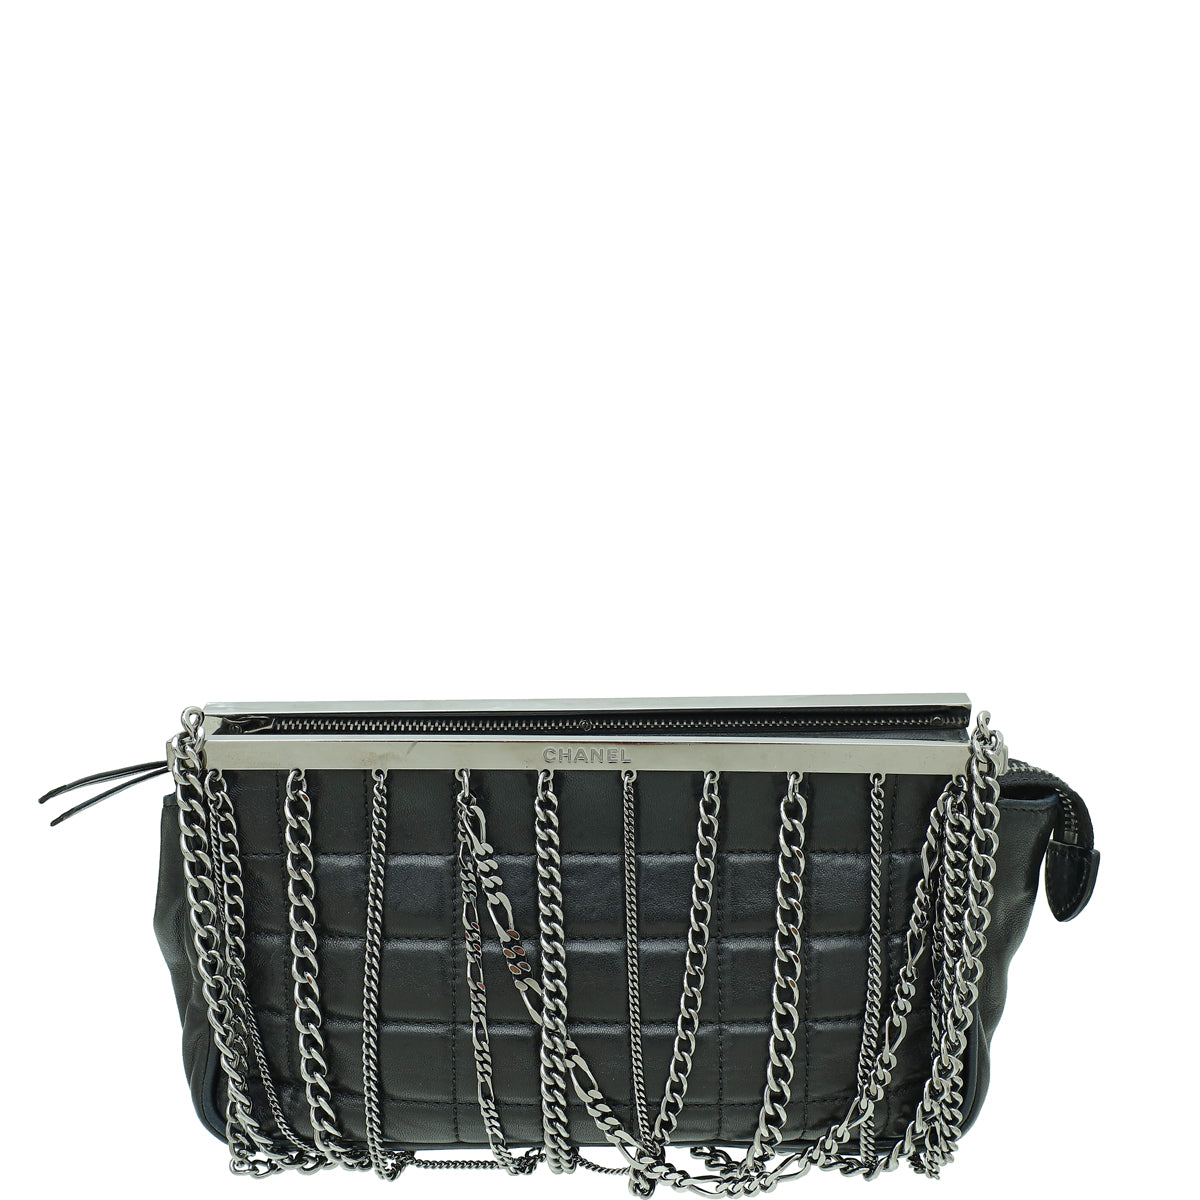 Chanel Black Chocolate Bar Multi-Chain Clutch Bag